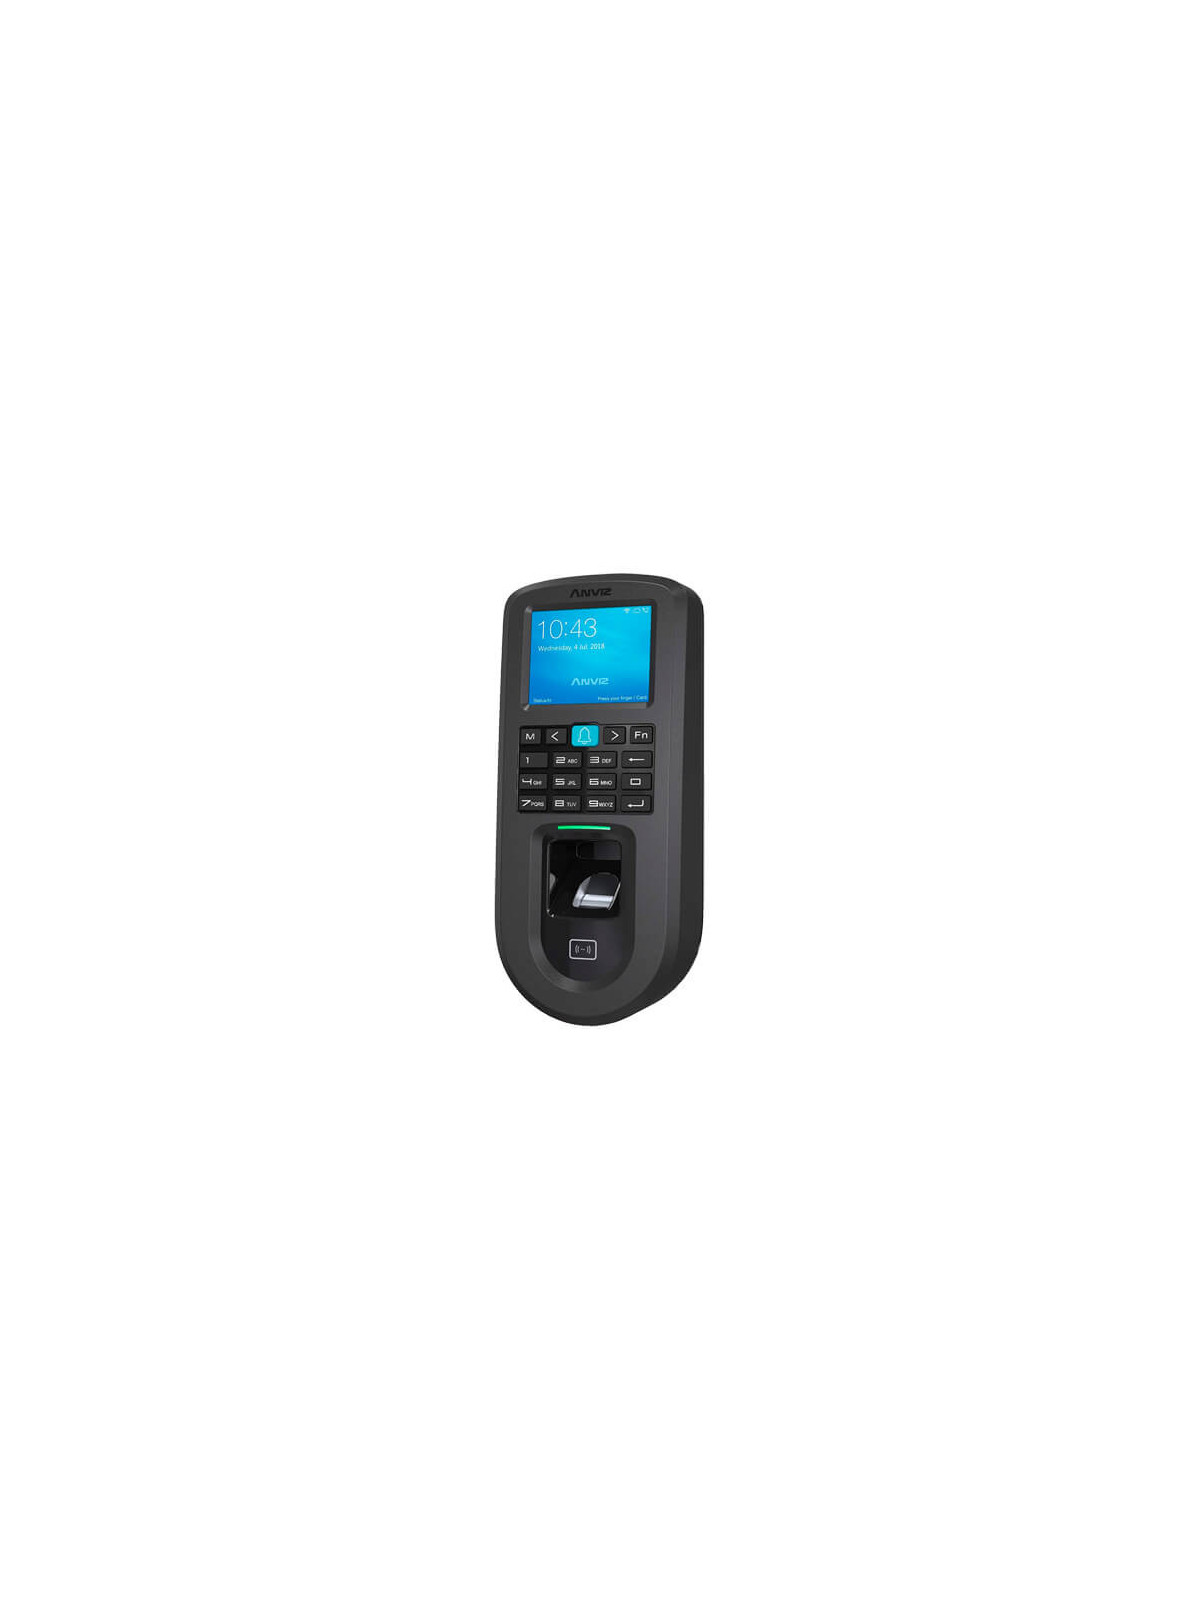 Lector biométrico autónomo Anviz VF30-PRO Huellas RFID Teclado RS485 POE miniUSB Wiegand